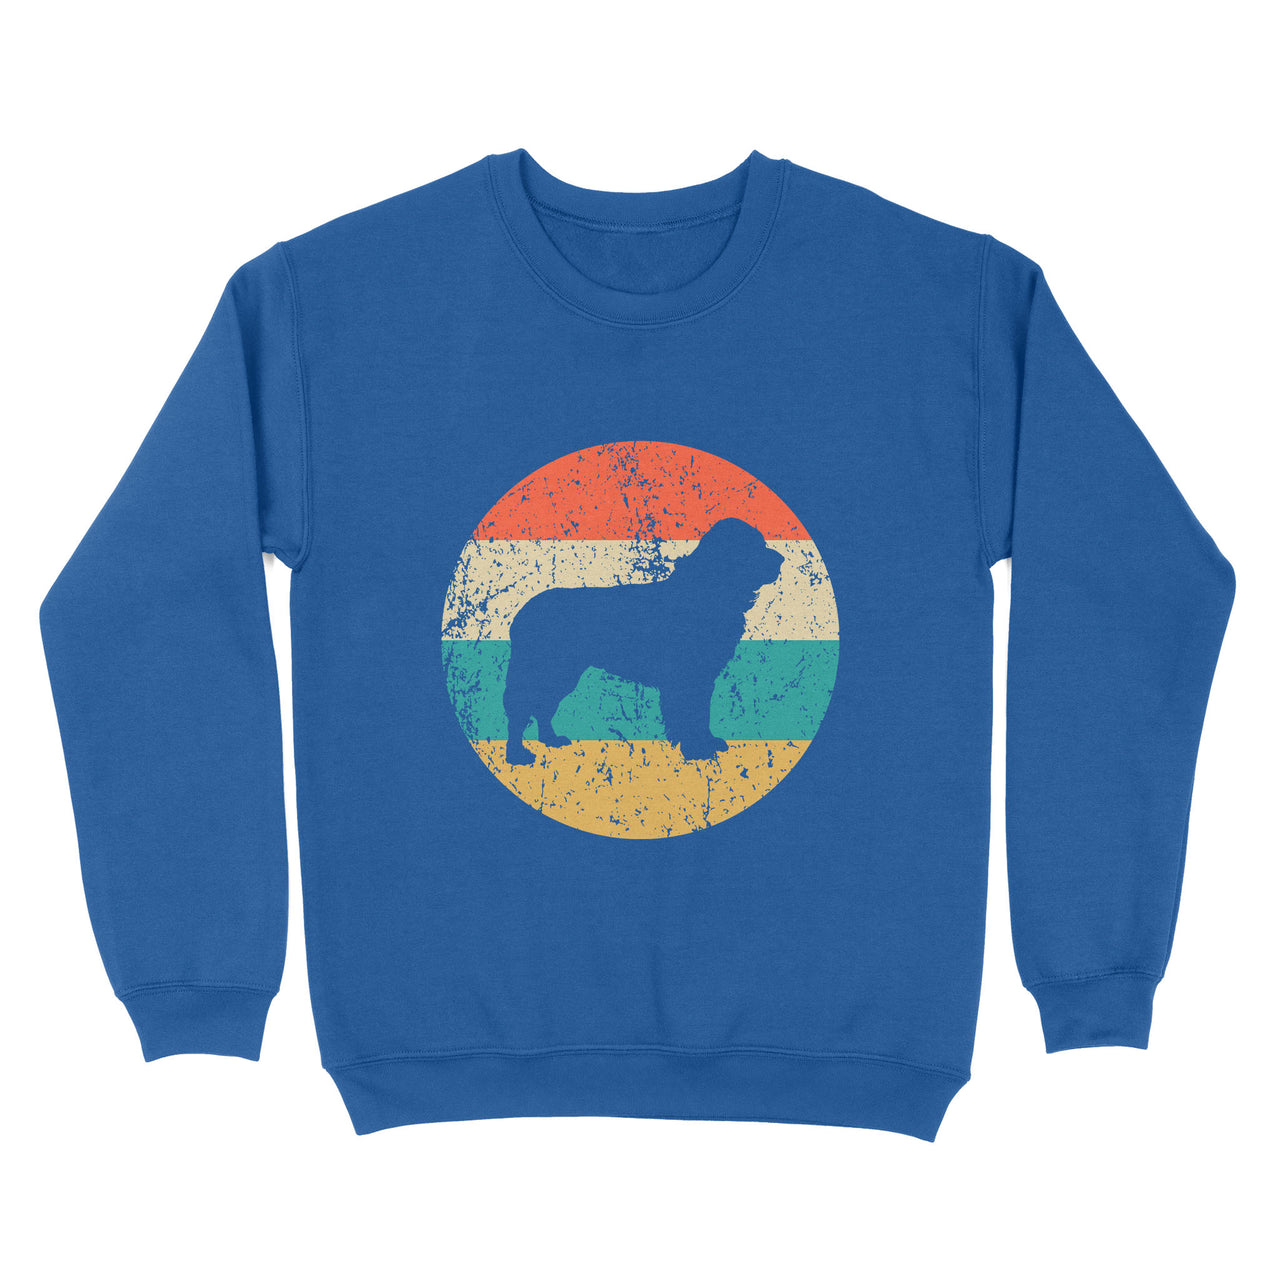 Retro Gift For Dog Lover - NewFoundland Vintage - Standard Crew Neck Sweatshirt